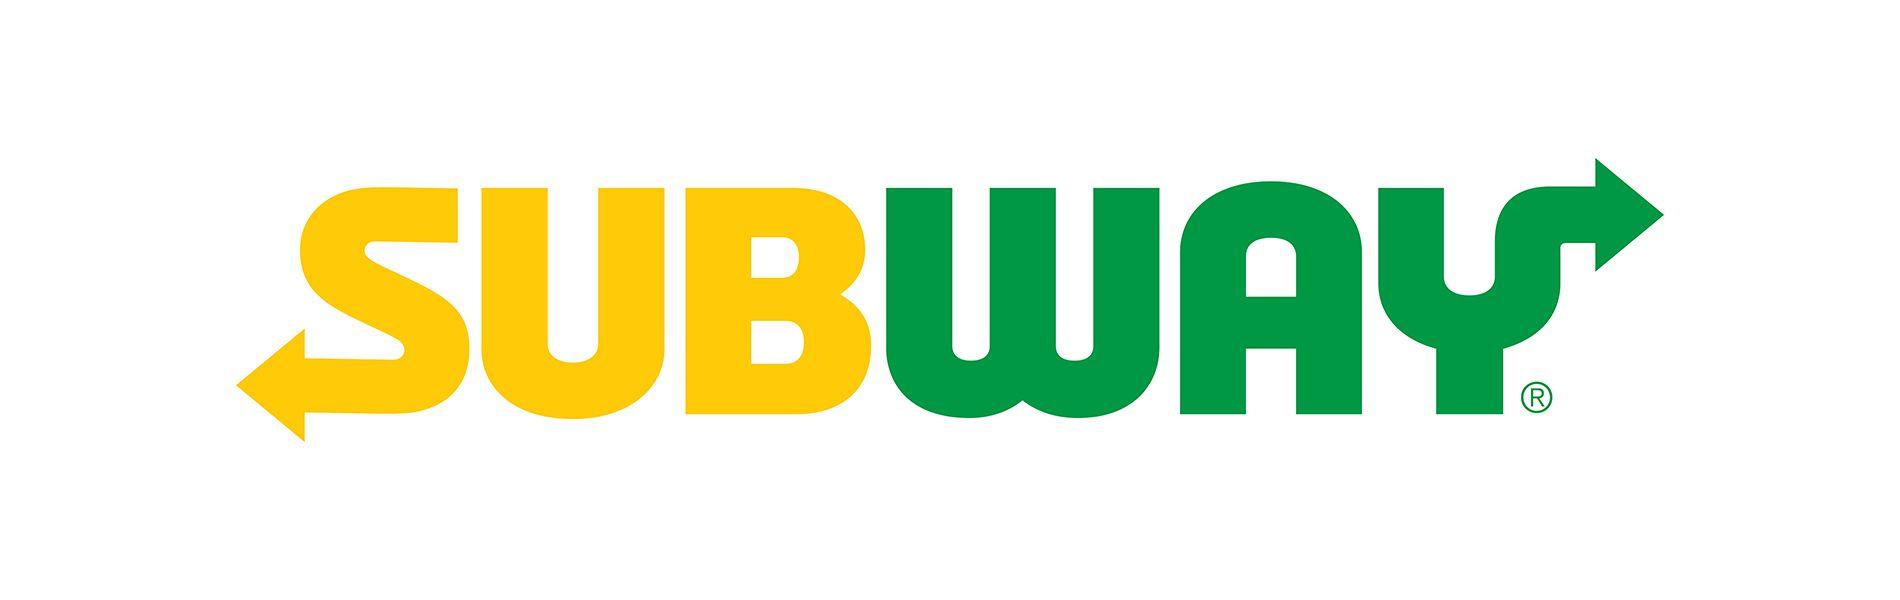 Subway Logo - SUBWAY® RESTAURANTS REVEALS BOLD NEW LOGO AND SYMBOL